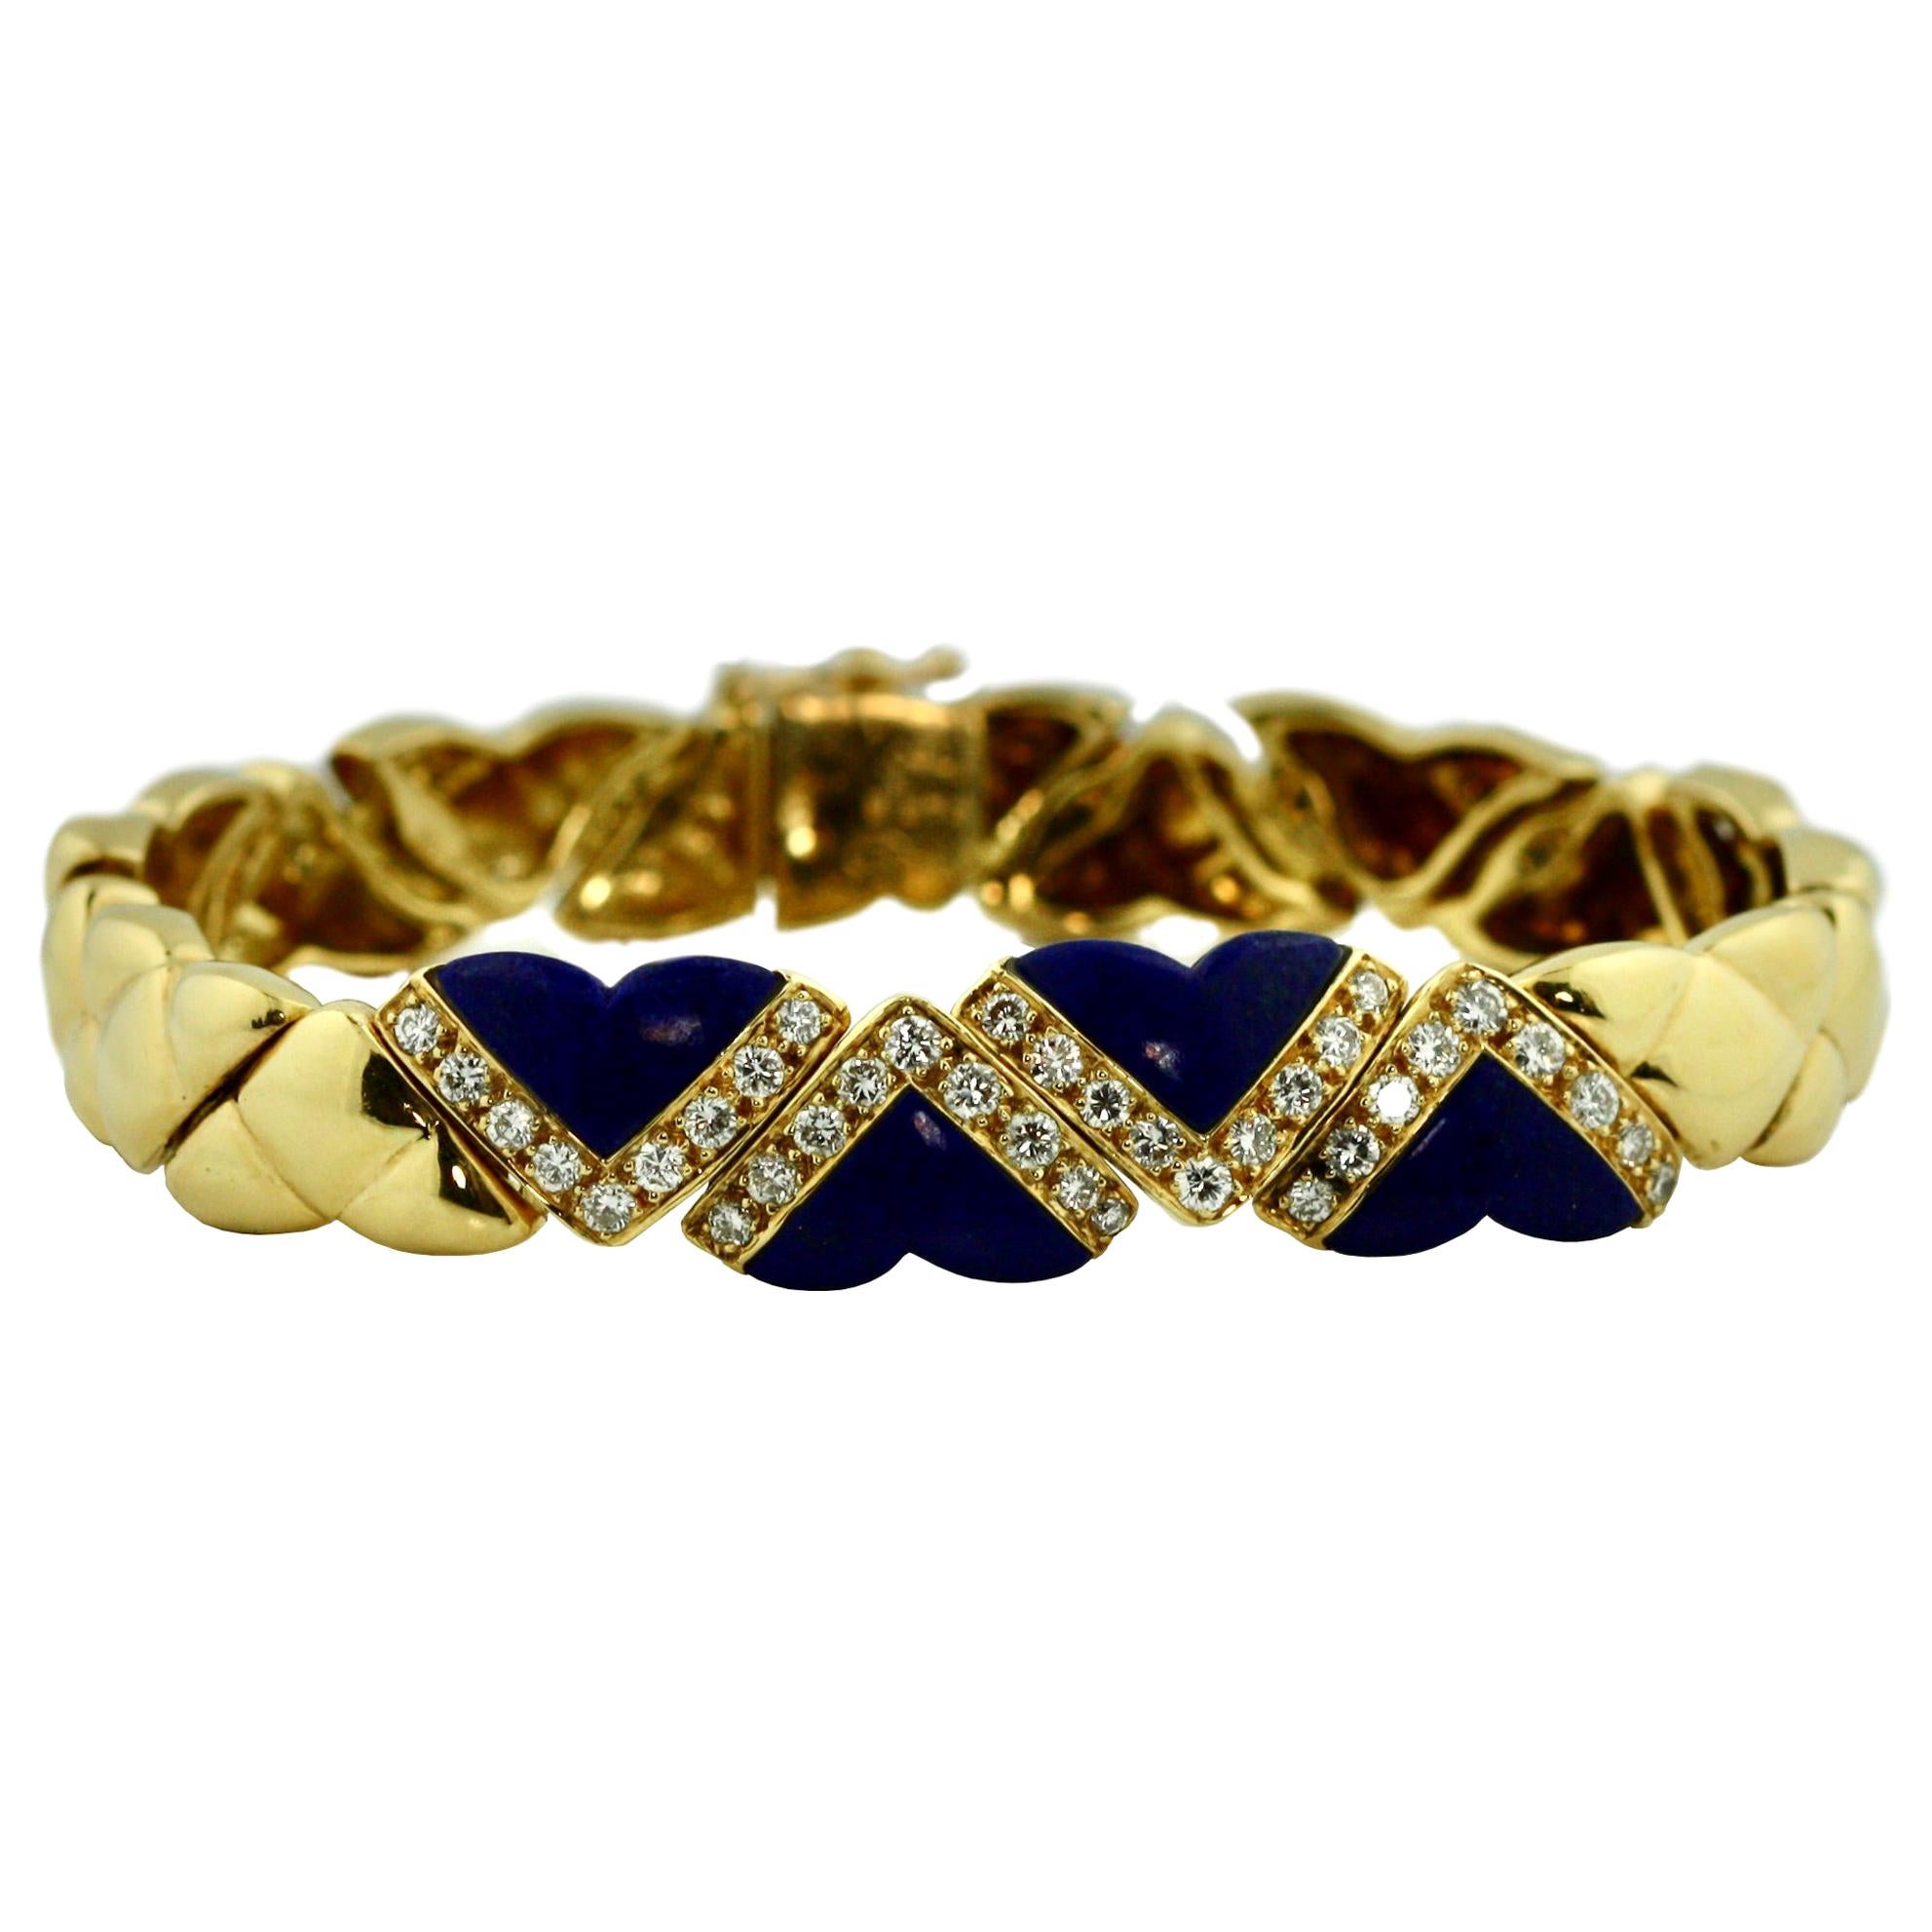 18 Karat Gold, Lapis and Diamond Bracelet, Fred, Paris